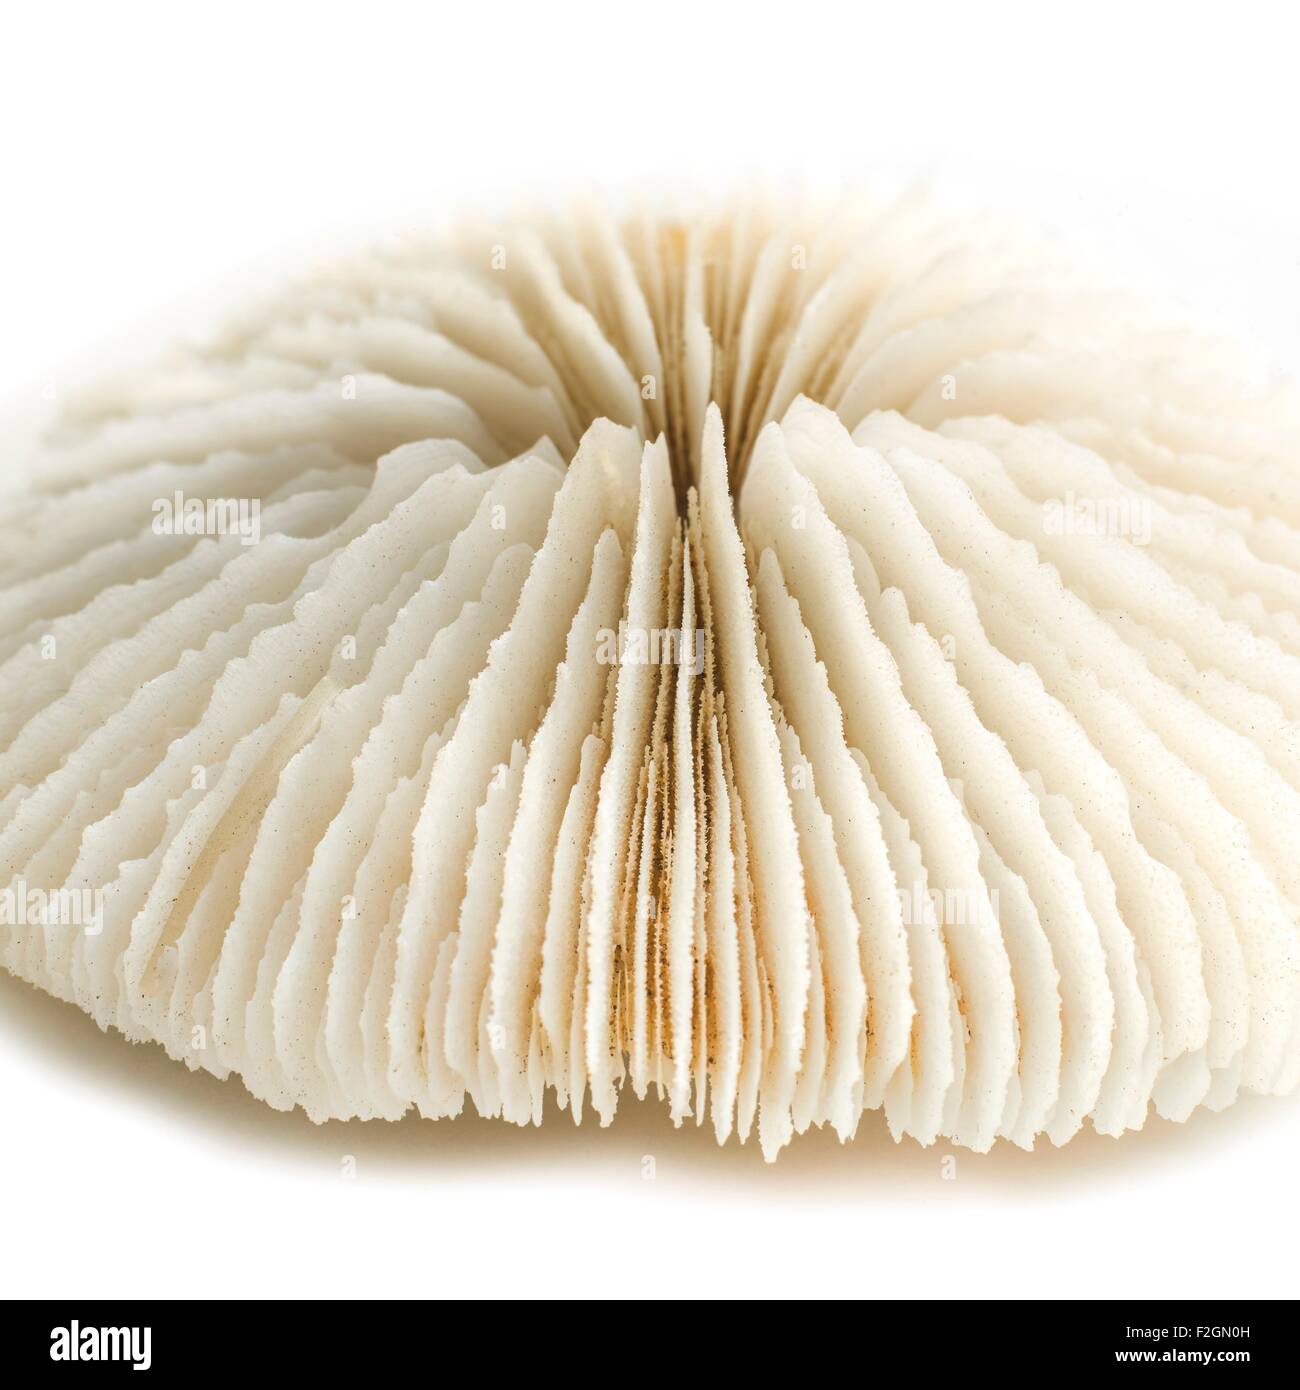 Mushroom coral Stock Photo